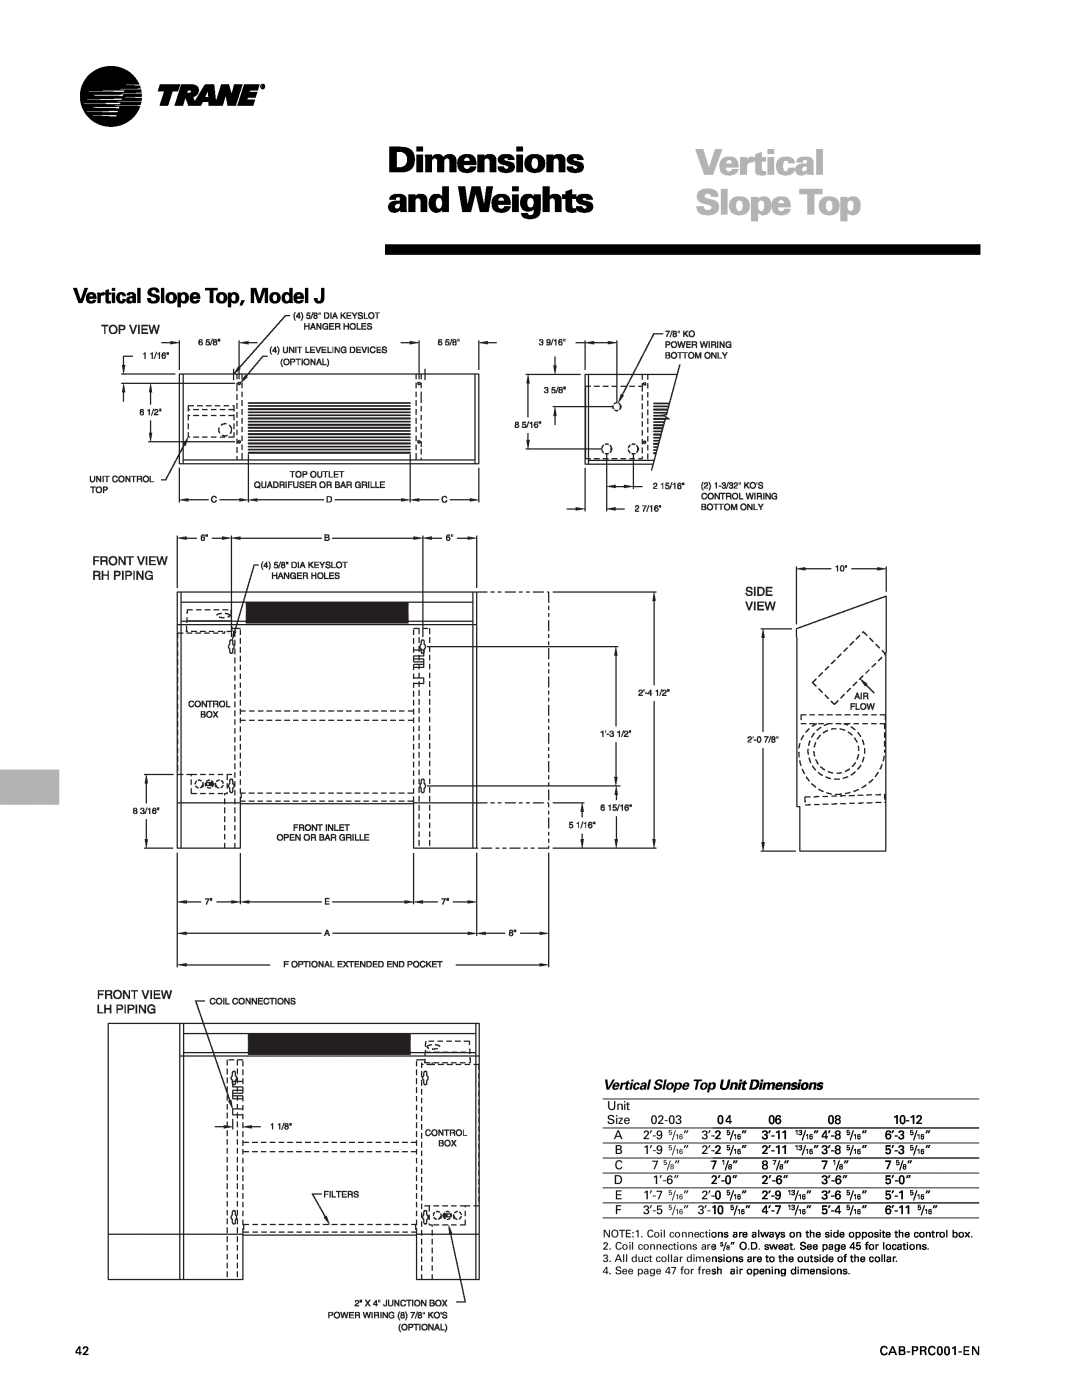 Trane CAB-PRC001-EN manual Dimensions, and Weights, Vertical Slope Top, Model J 